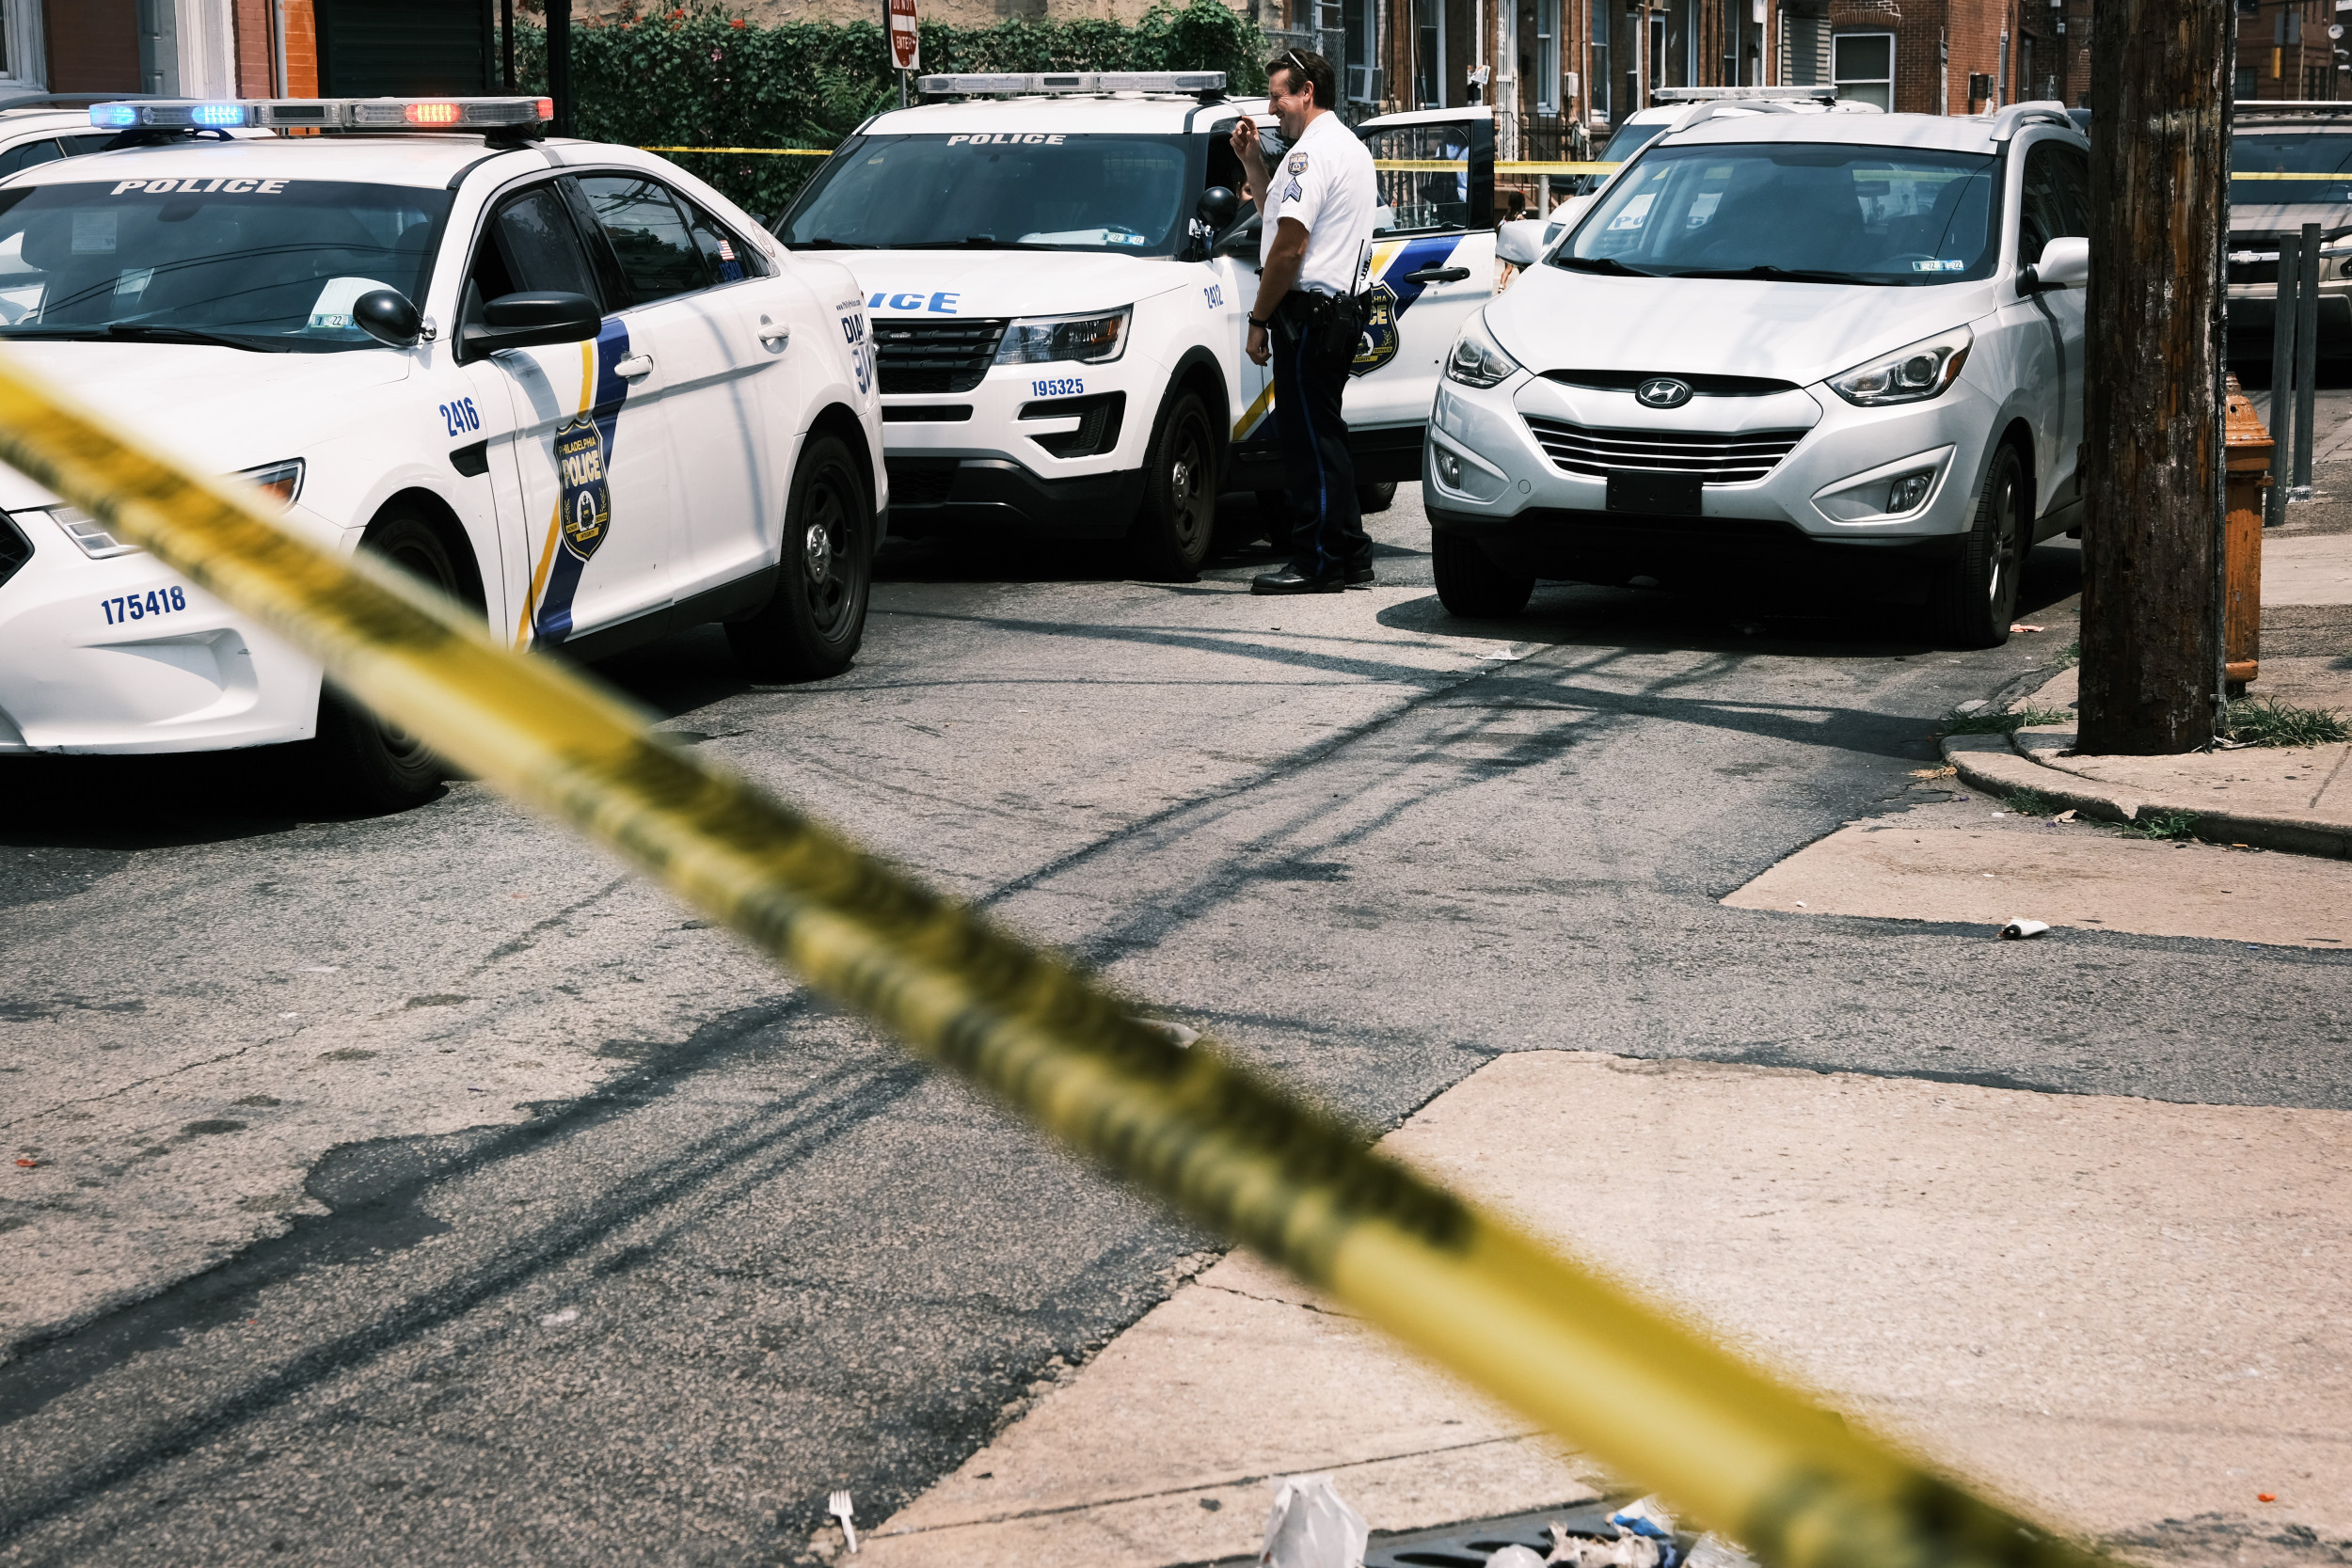 Philadelphia mass shooting leaves 4 dead, 4 injured